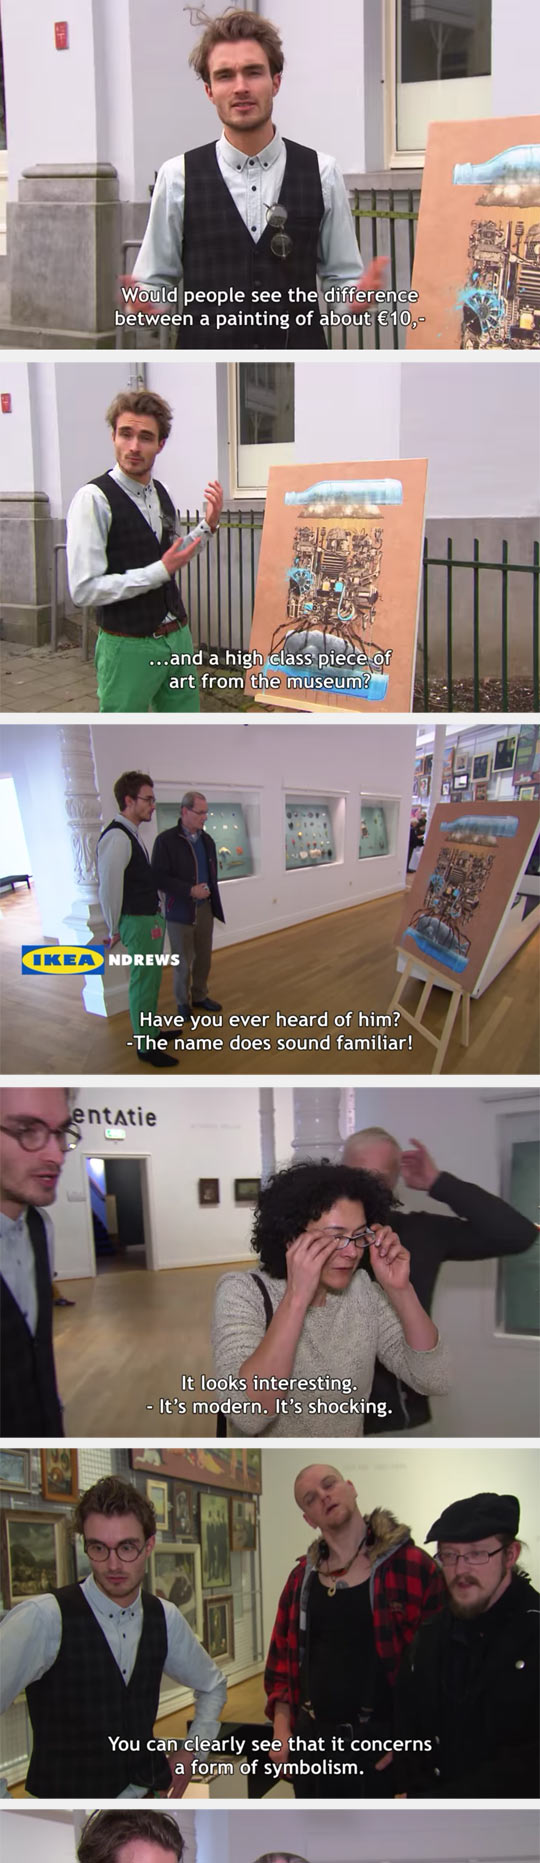 Ikea Print In A Modern Art Museum